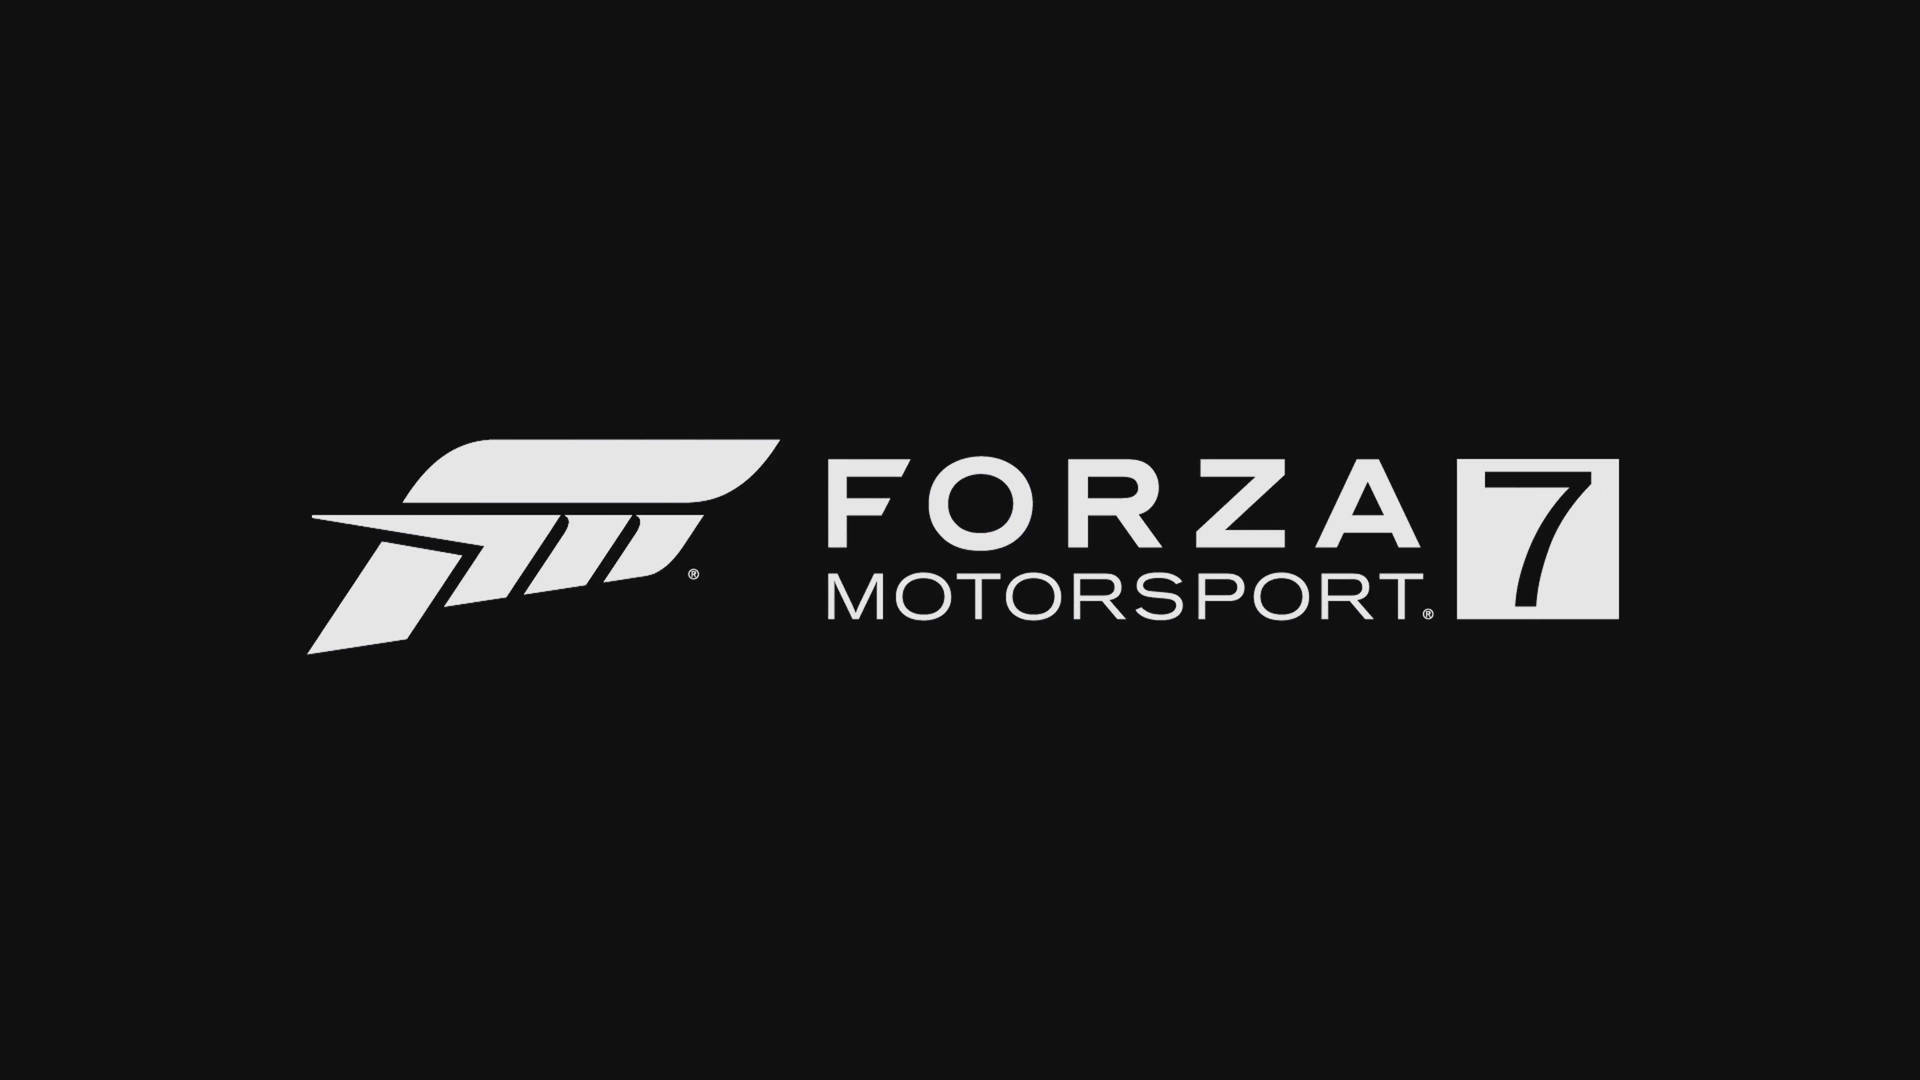 Forza 7 Motorsport Logo Background